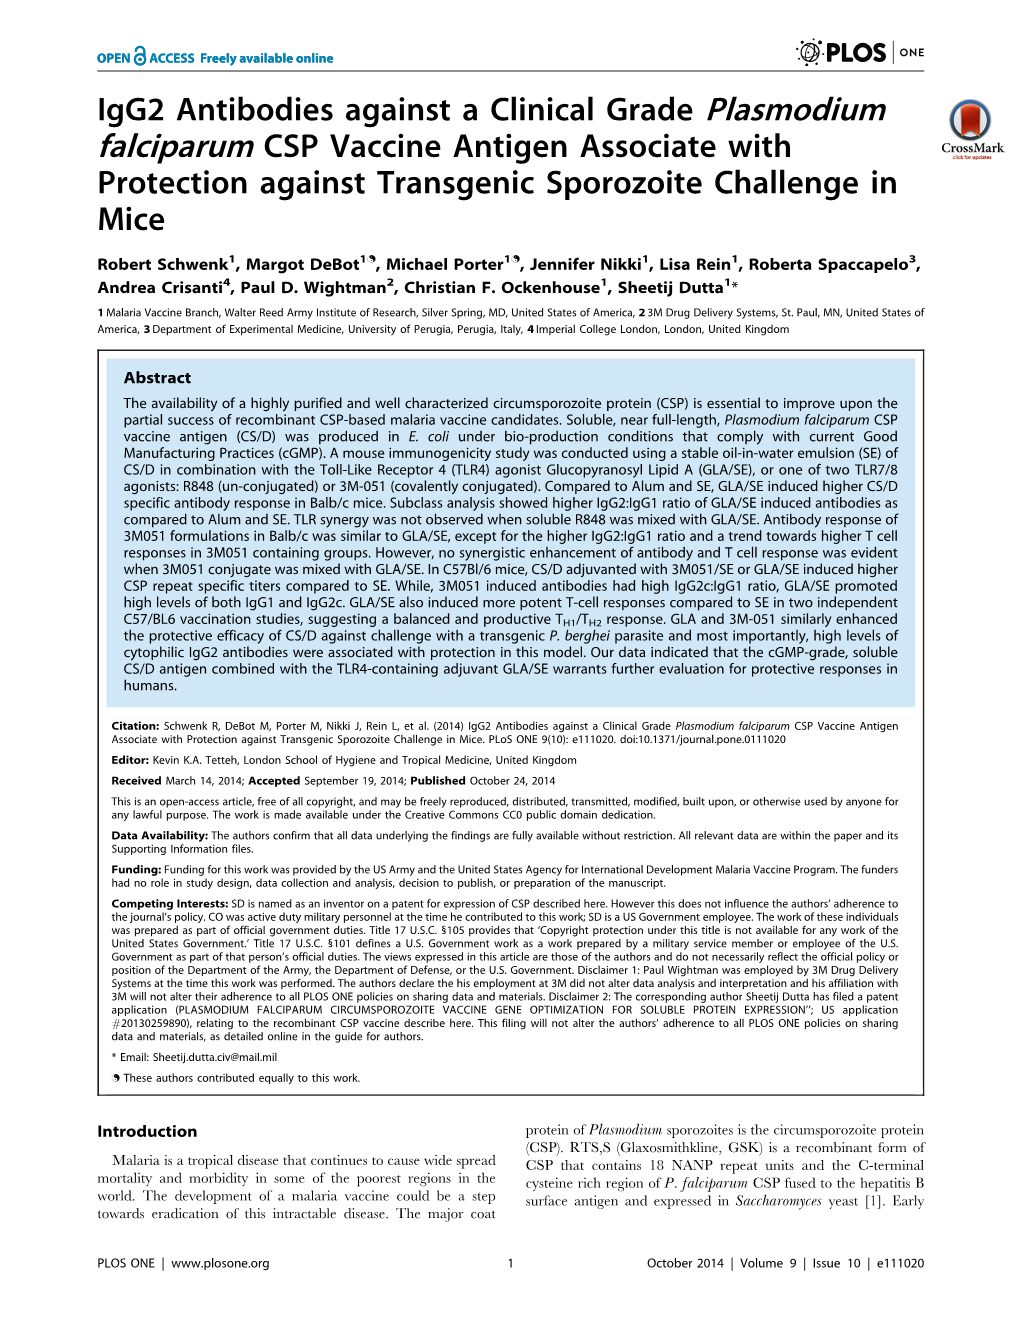 Falciparum CSP Vaccine Antigen Associate with Protection Against Transgenic Sporozoite Challenge in Mice